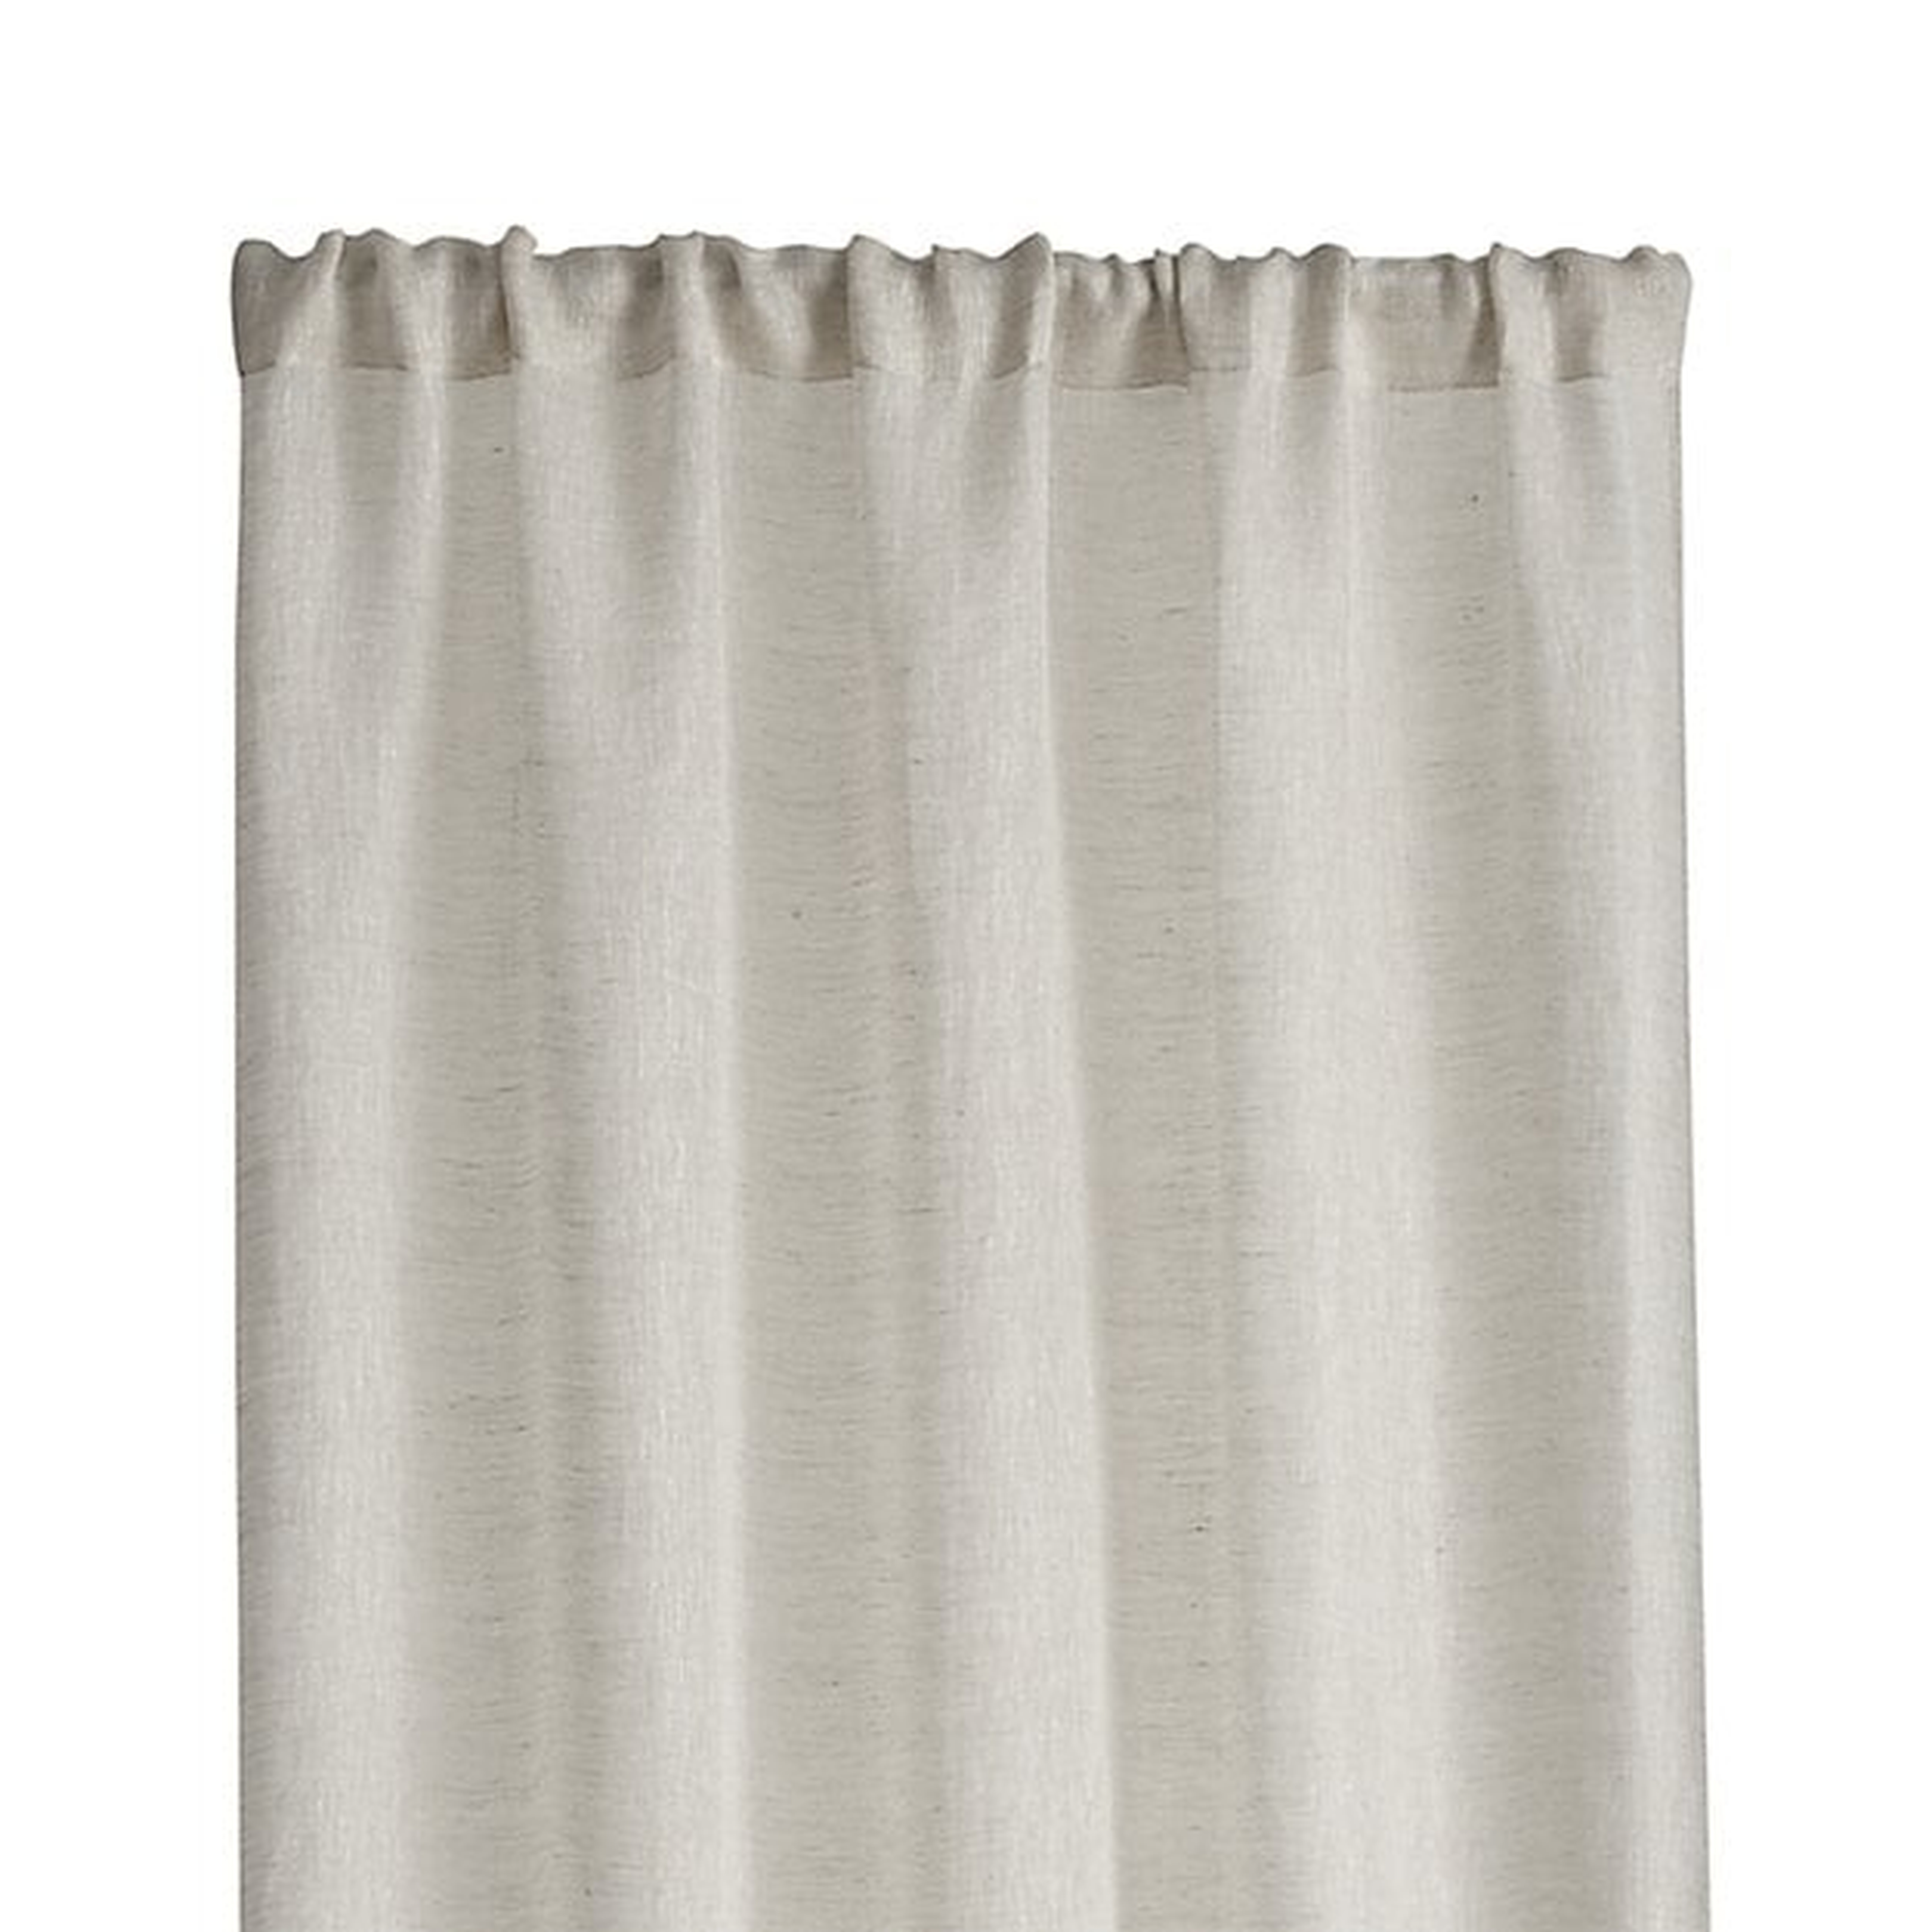 Linen Sheer Curtain Panel - Natural - 96" - Crate and Barrel